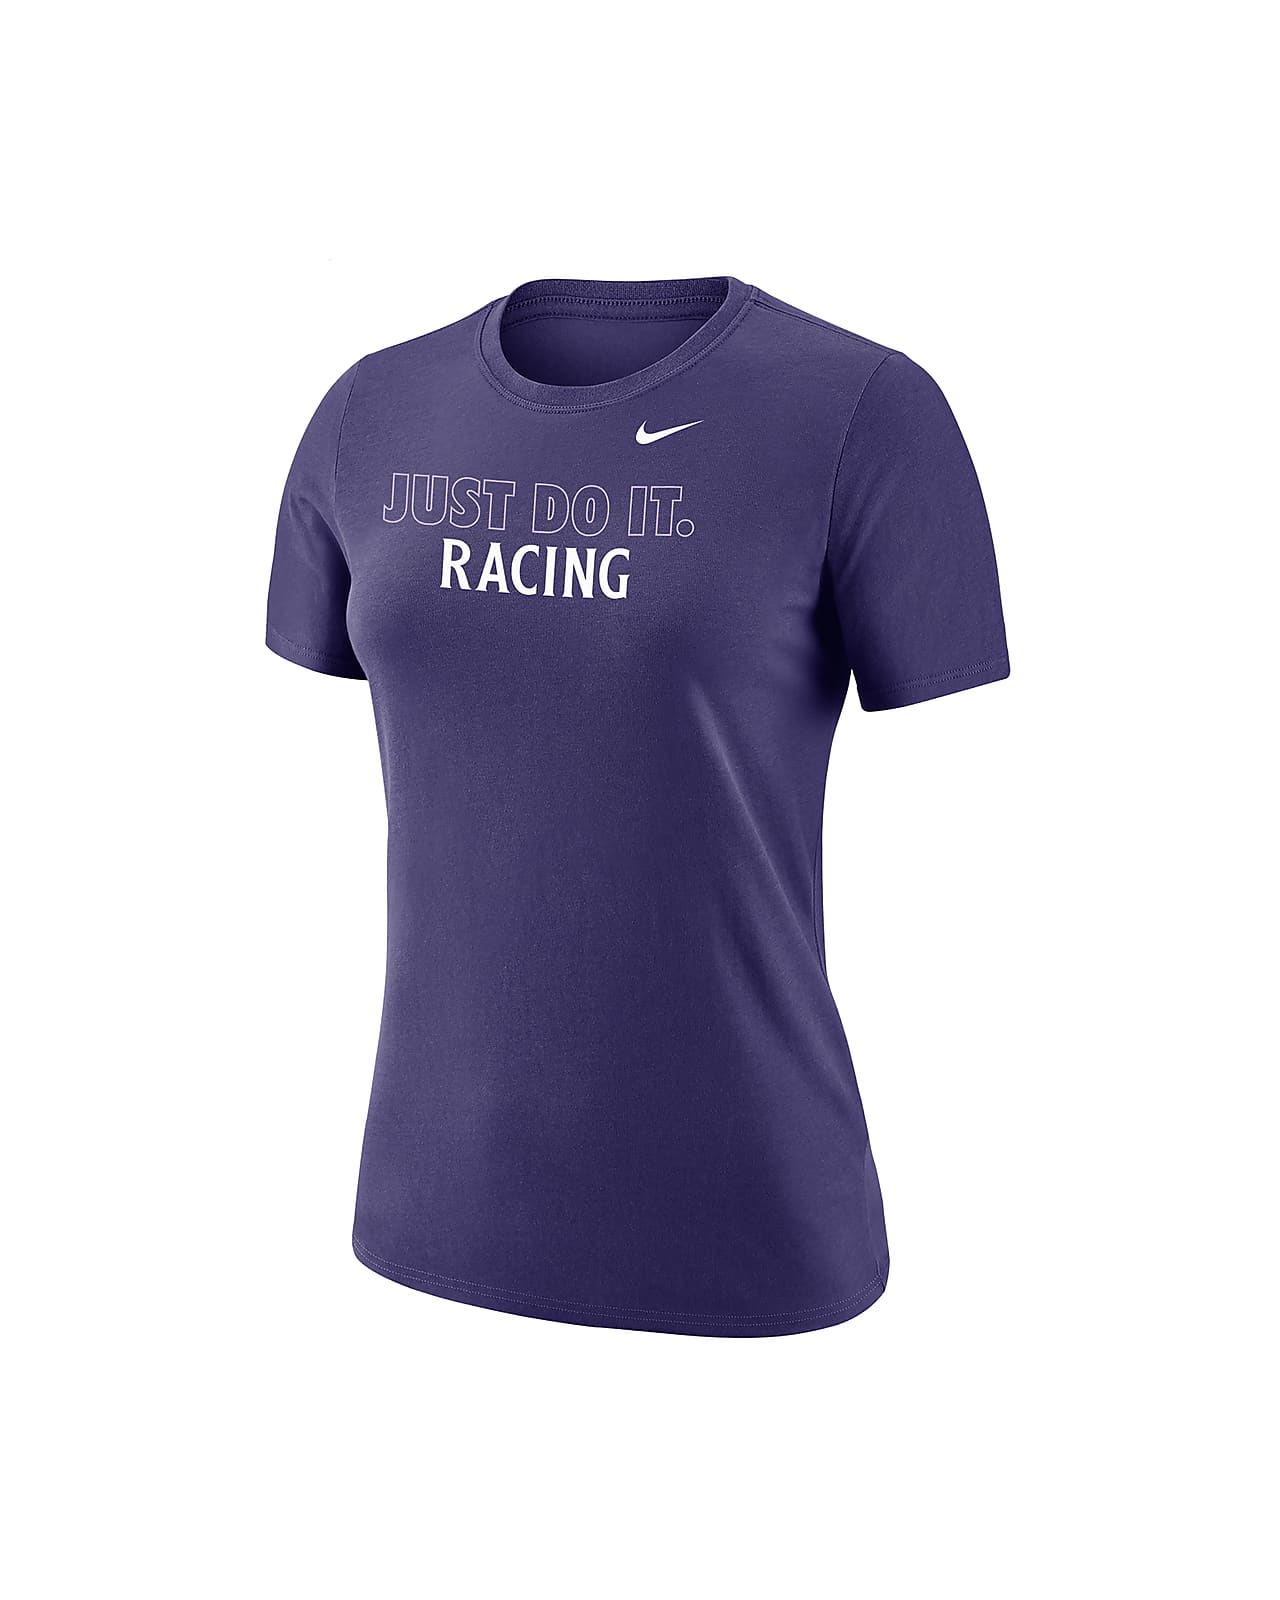 Racing Louisville Women's Nike Soccer T-Shirt